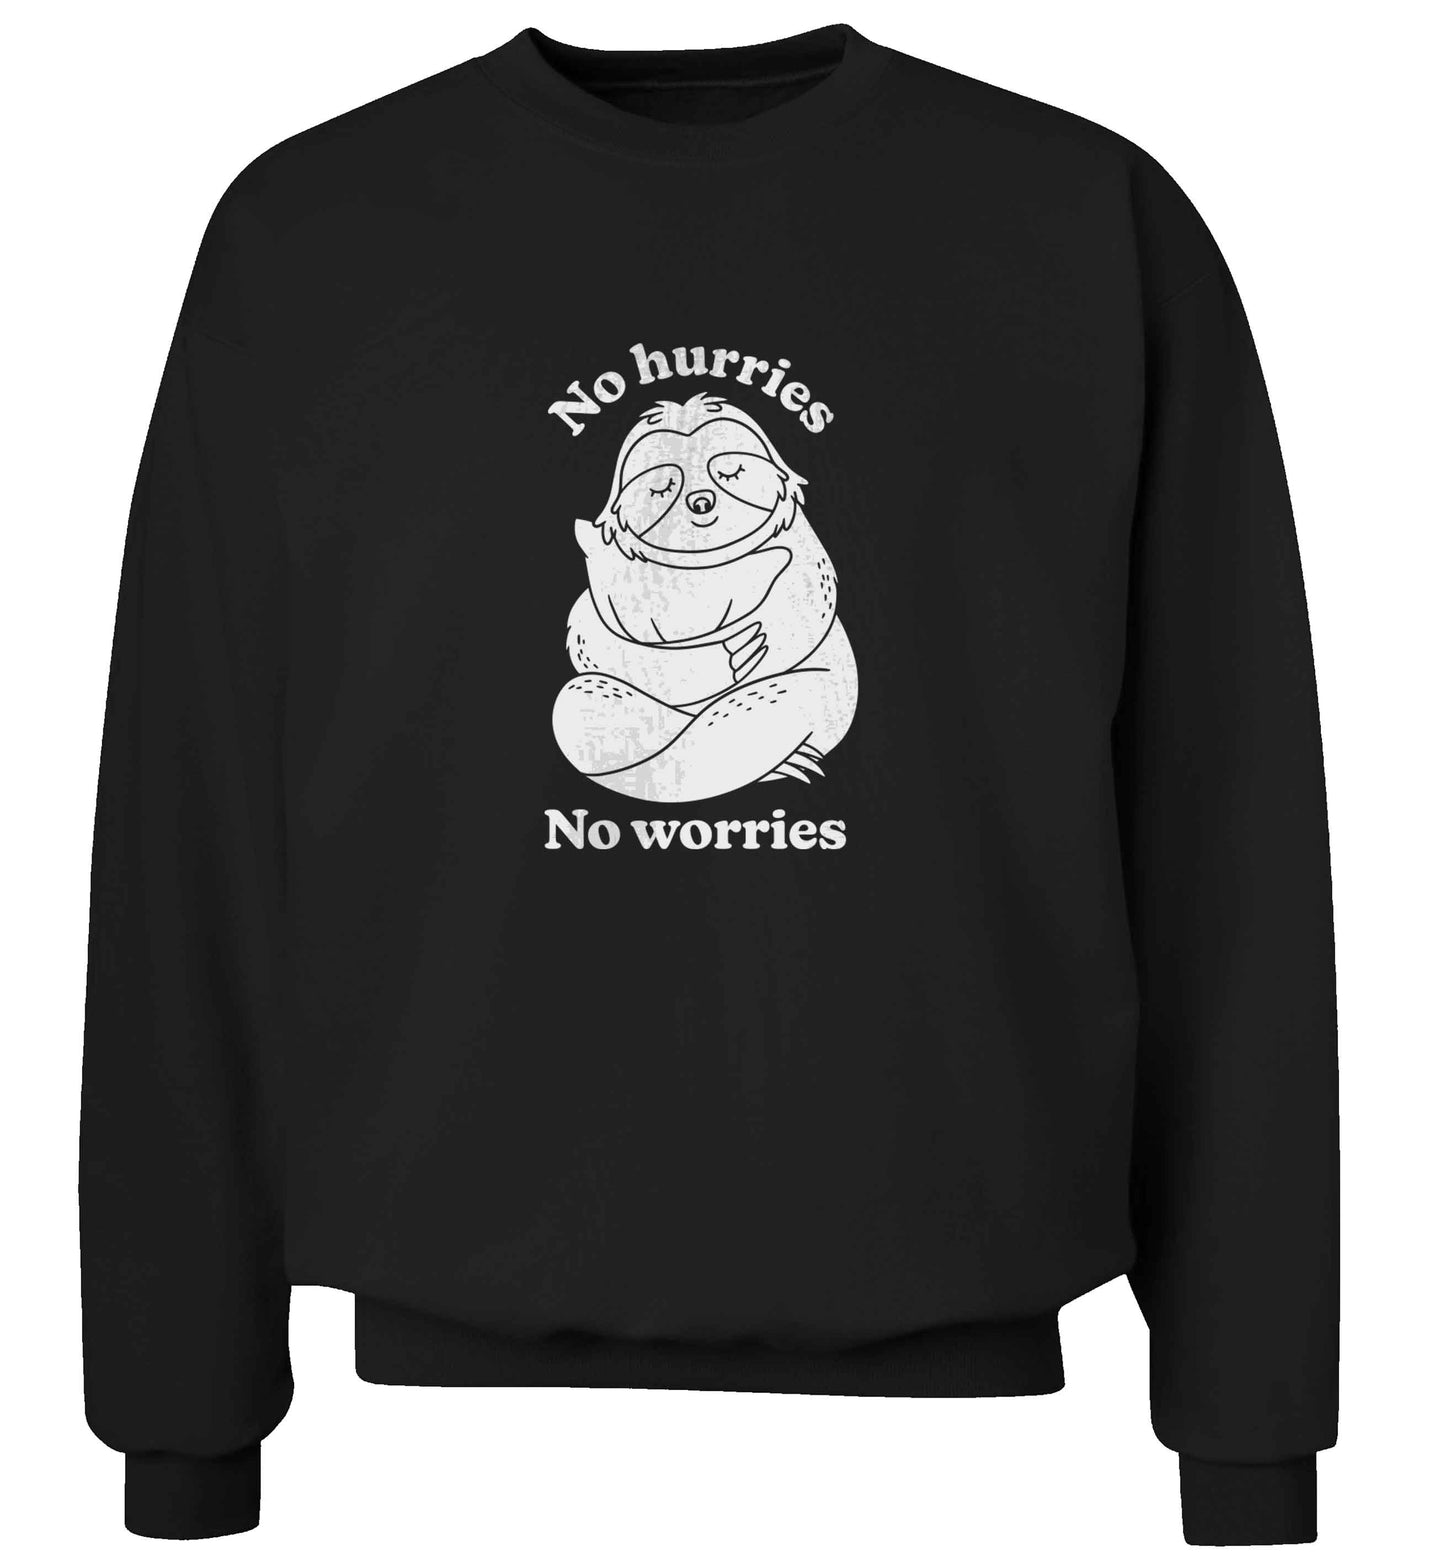 No hurries no worries adult's unisex black sweater 2XL